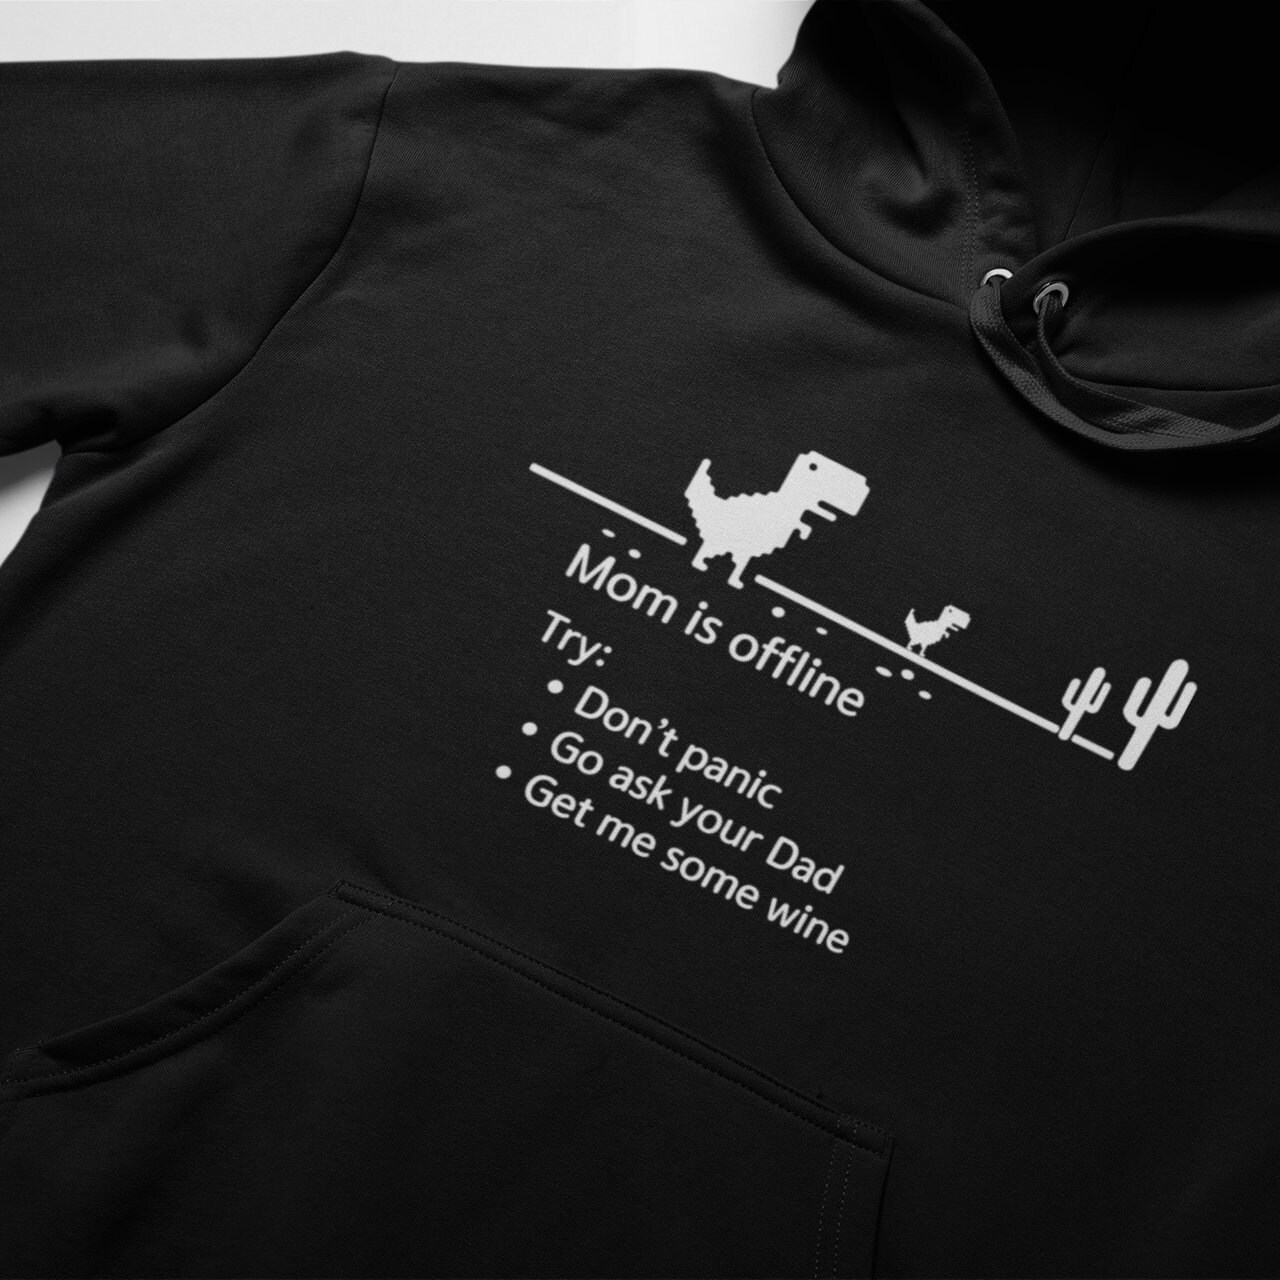 Offline T-Rex Game - Google Dino Run Kids T-Shirt for Sale by Livity